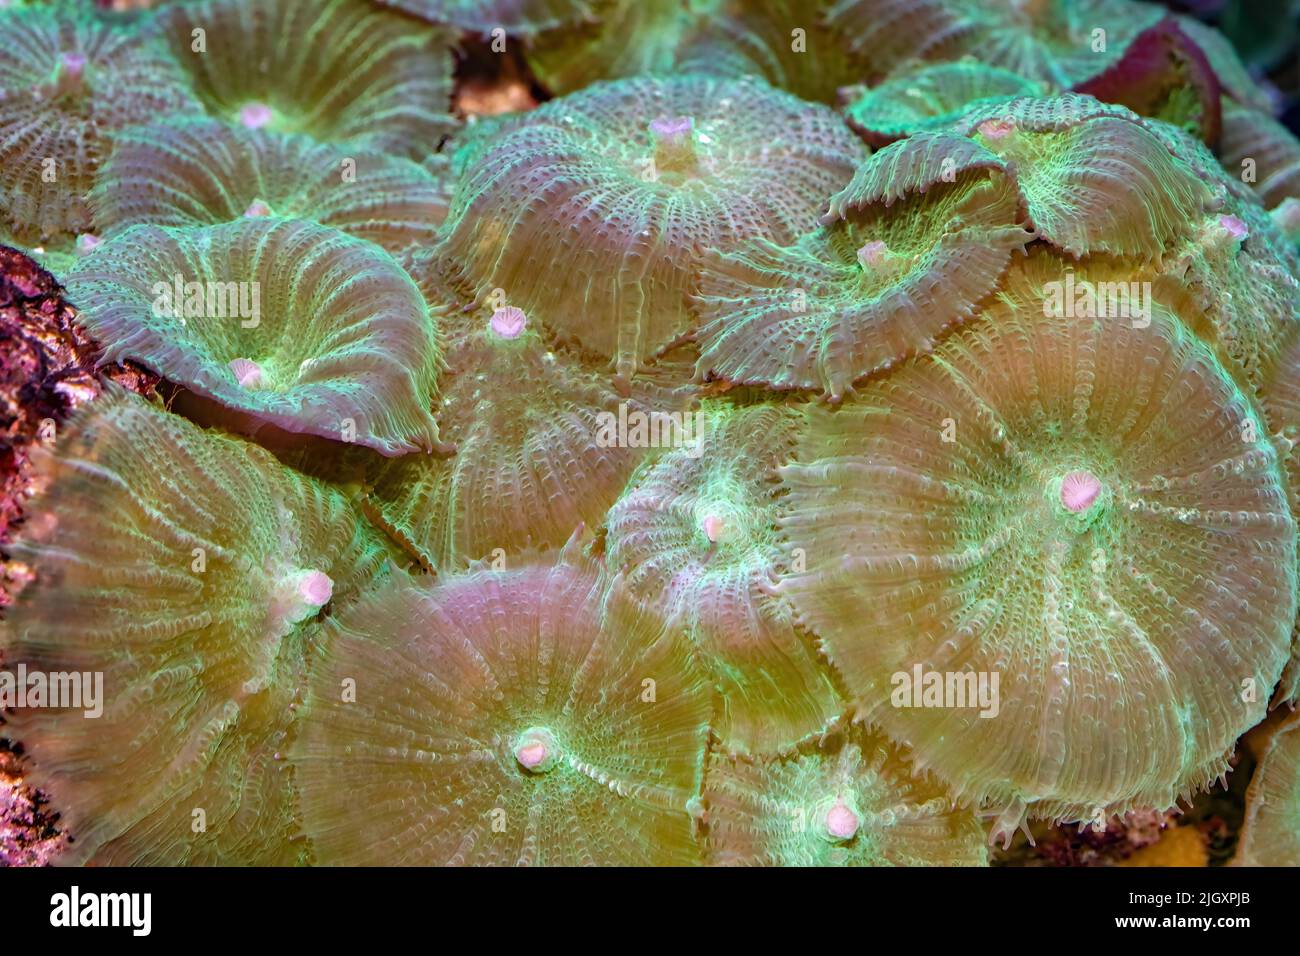 Anemoni per tappeti, Stichodactyla sp. Foto Stock